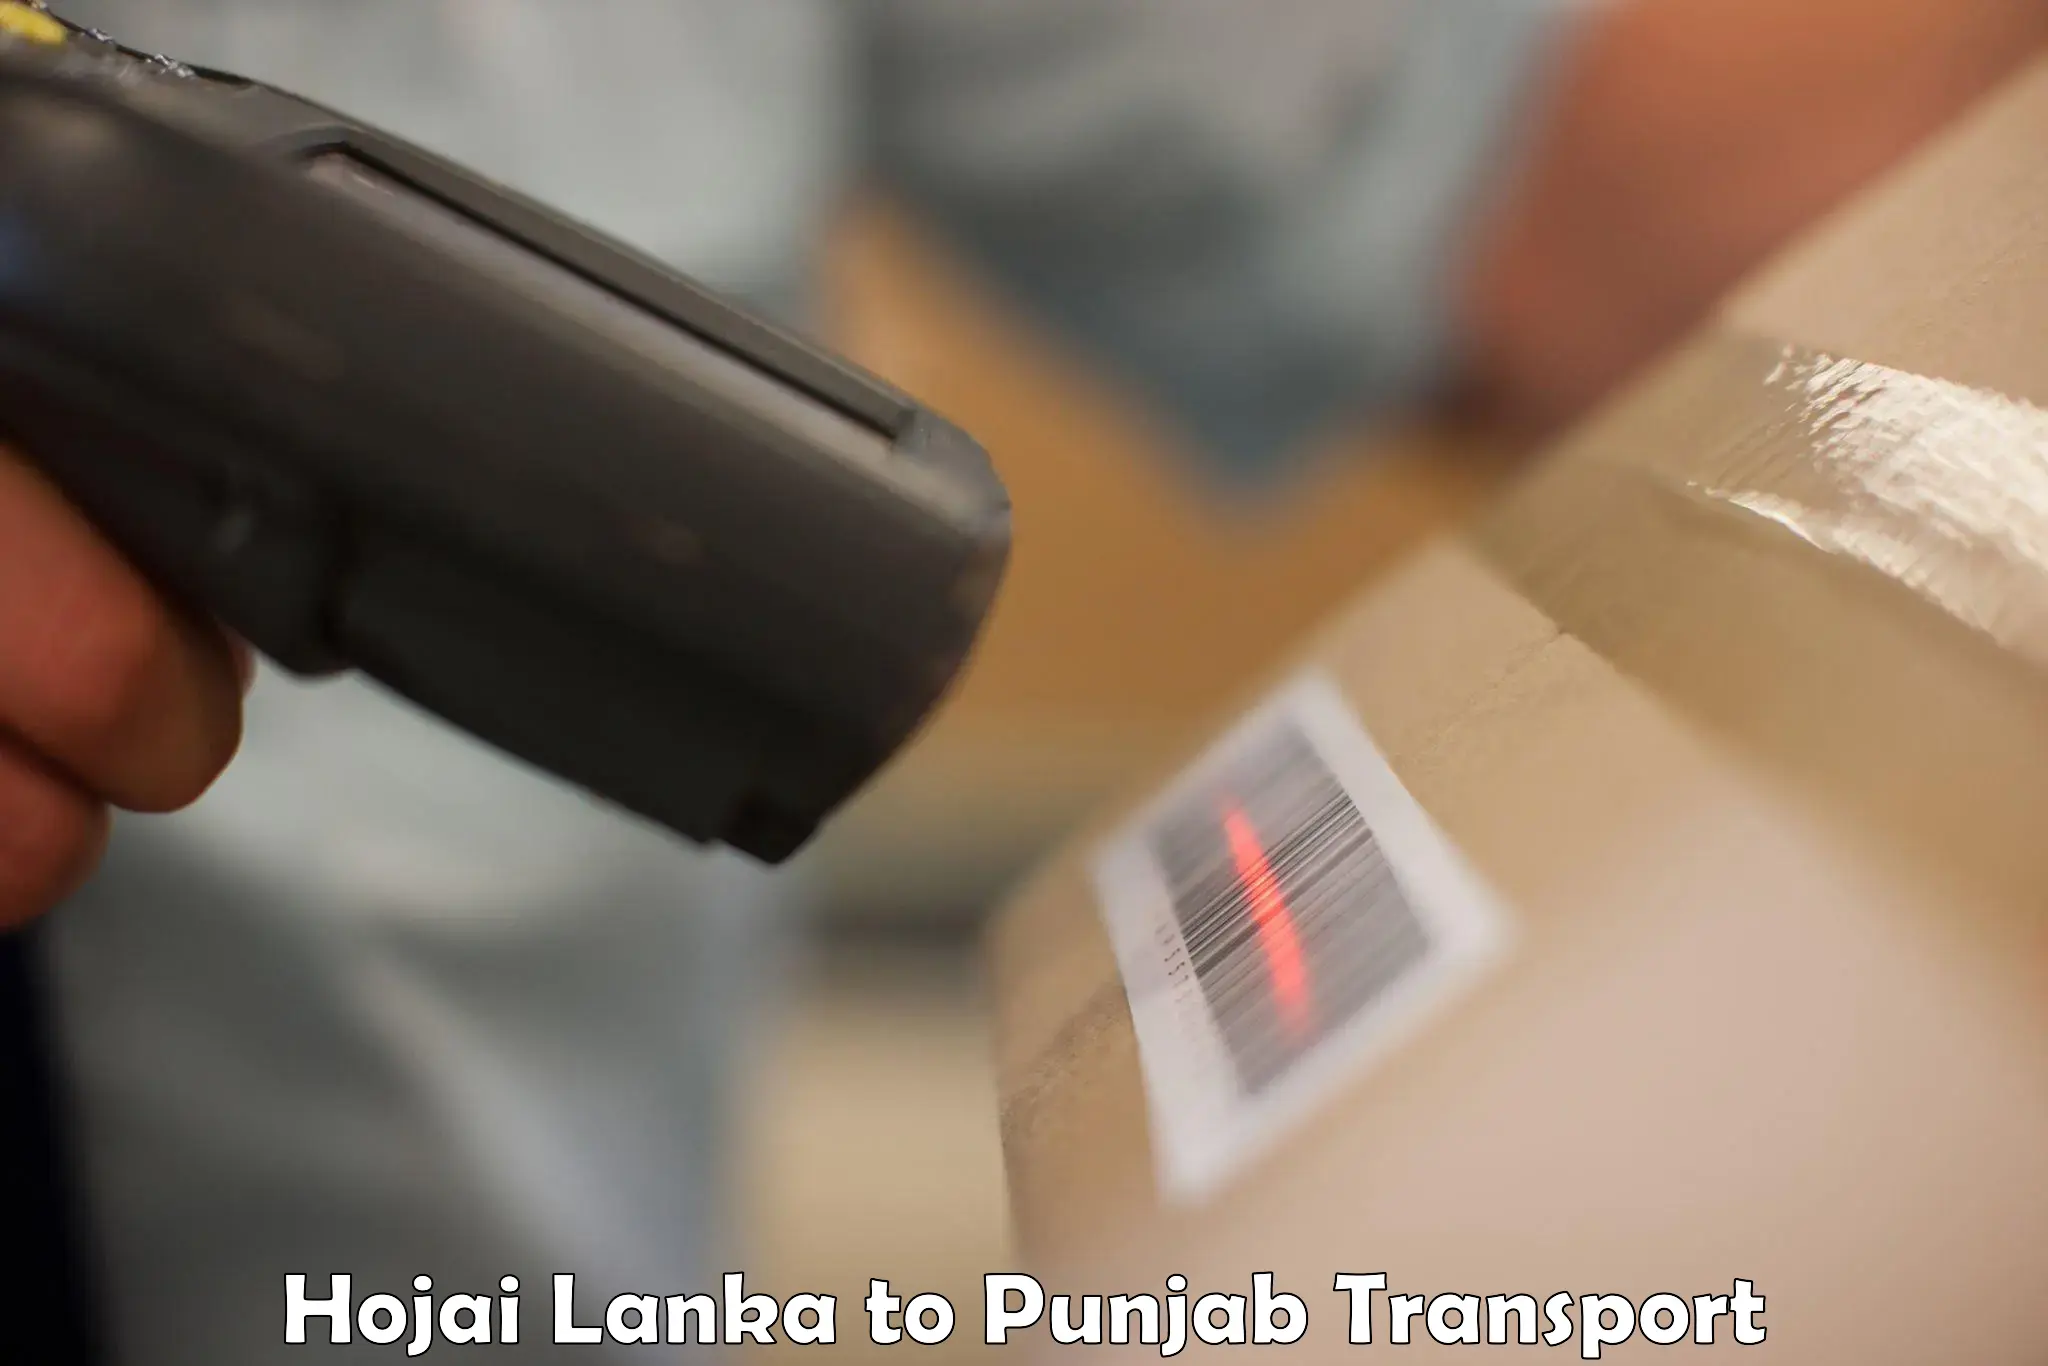 Truck transport companies in India Hojai Lanka to Punjab